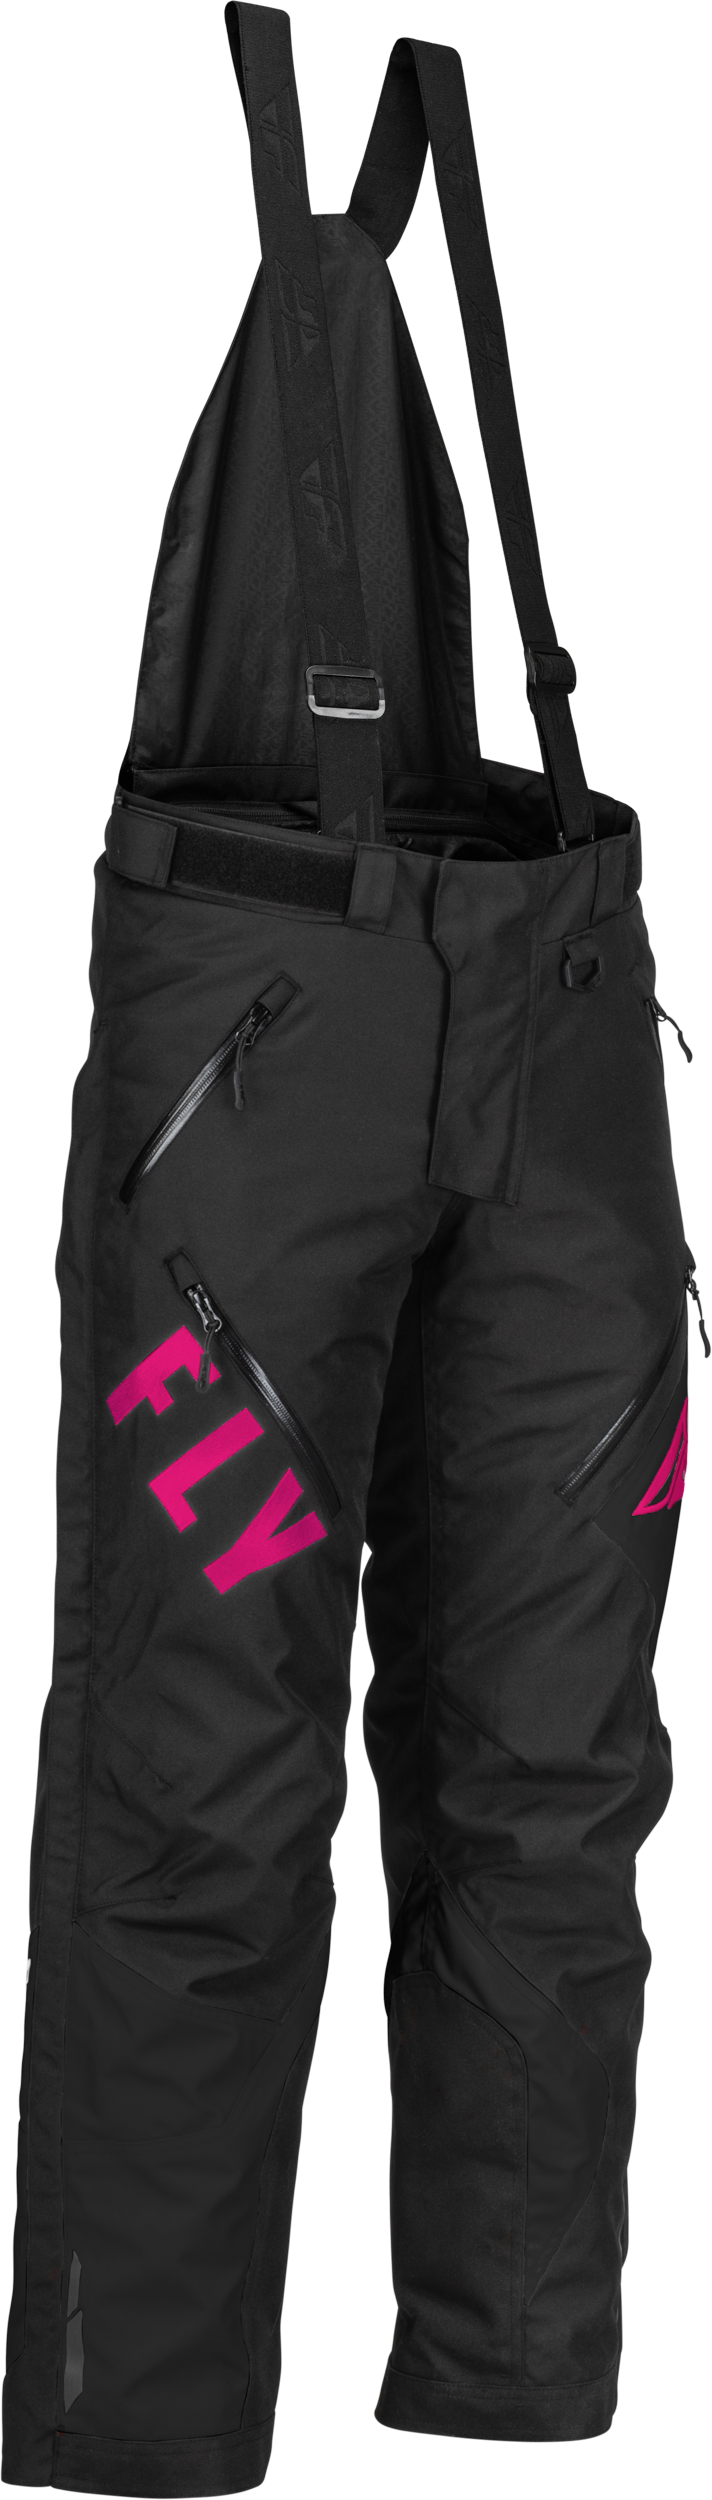 FLY RACING Women's Snx Pro Pants Black/Pink Md 470-4517M